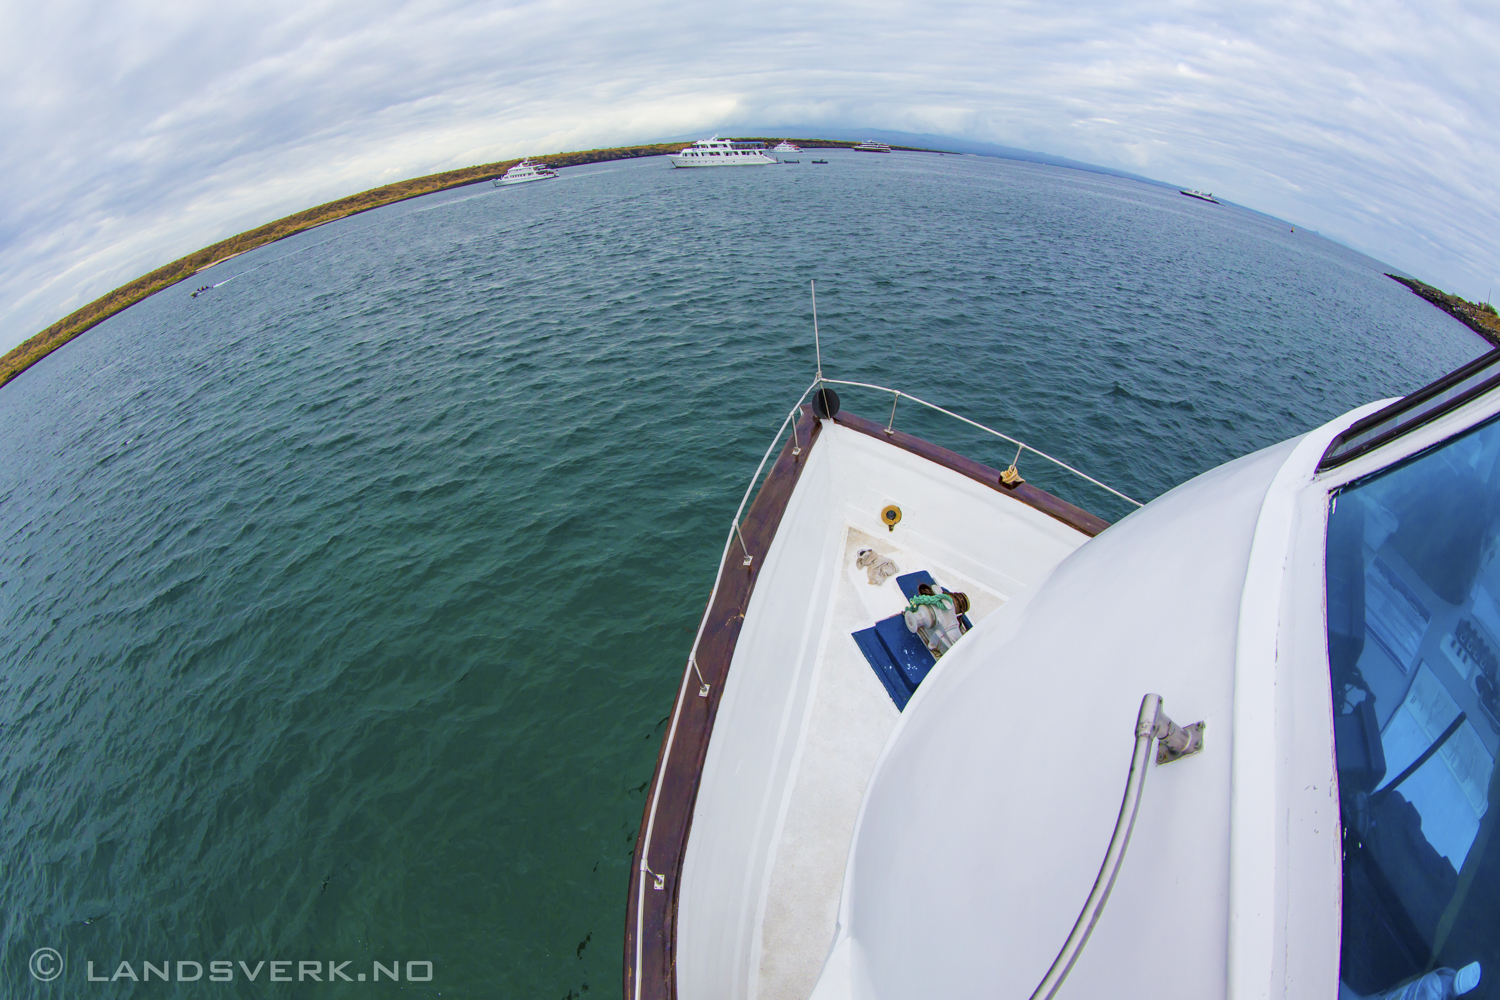 Sailing between the Galapagos Islands. 

(Canon EOS 5D Mark III / Canon EF 8-15mm f/4 L USM Fisheye)